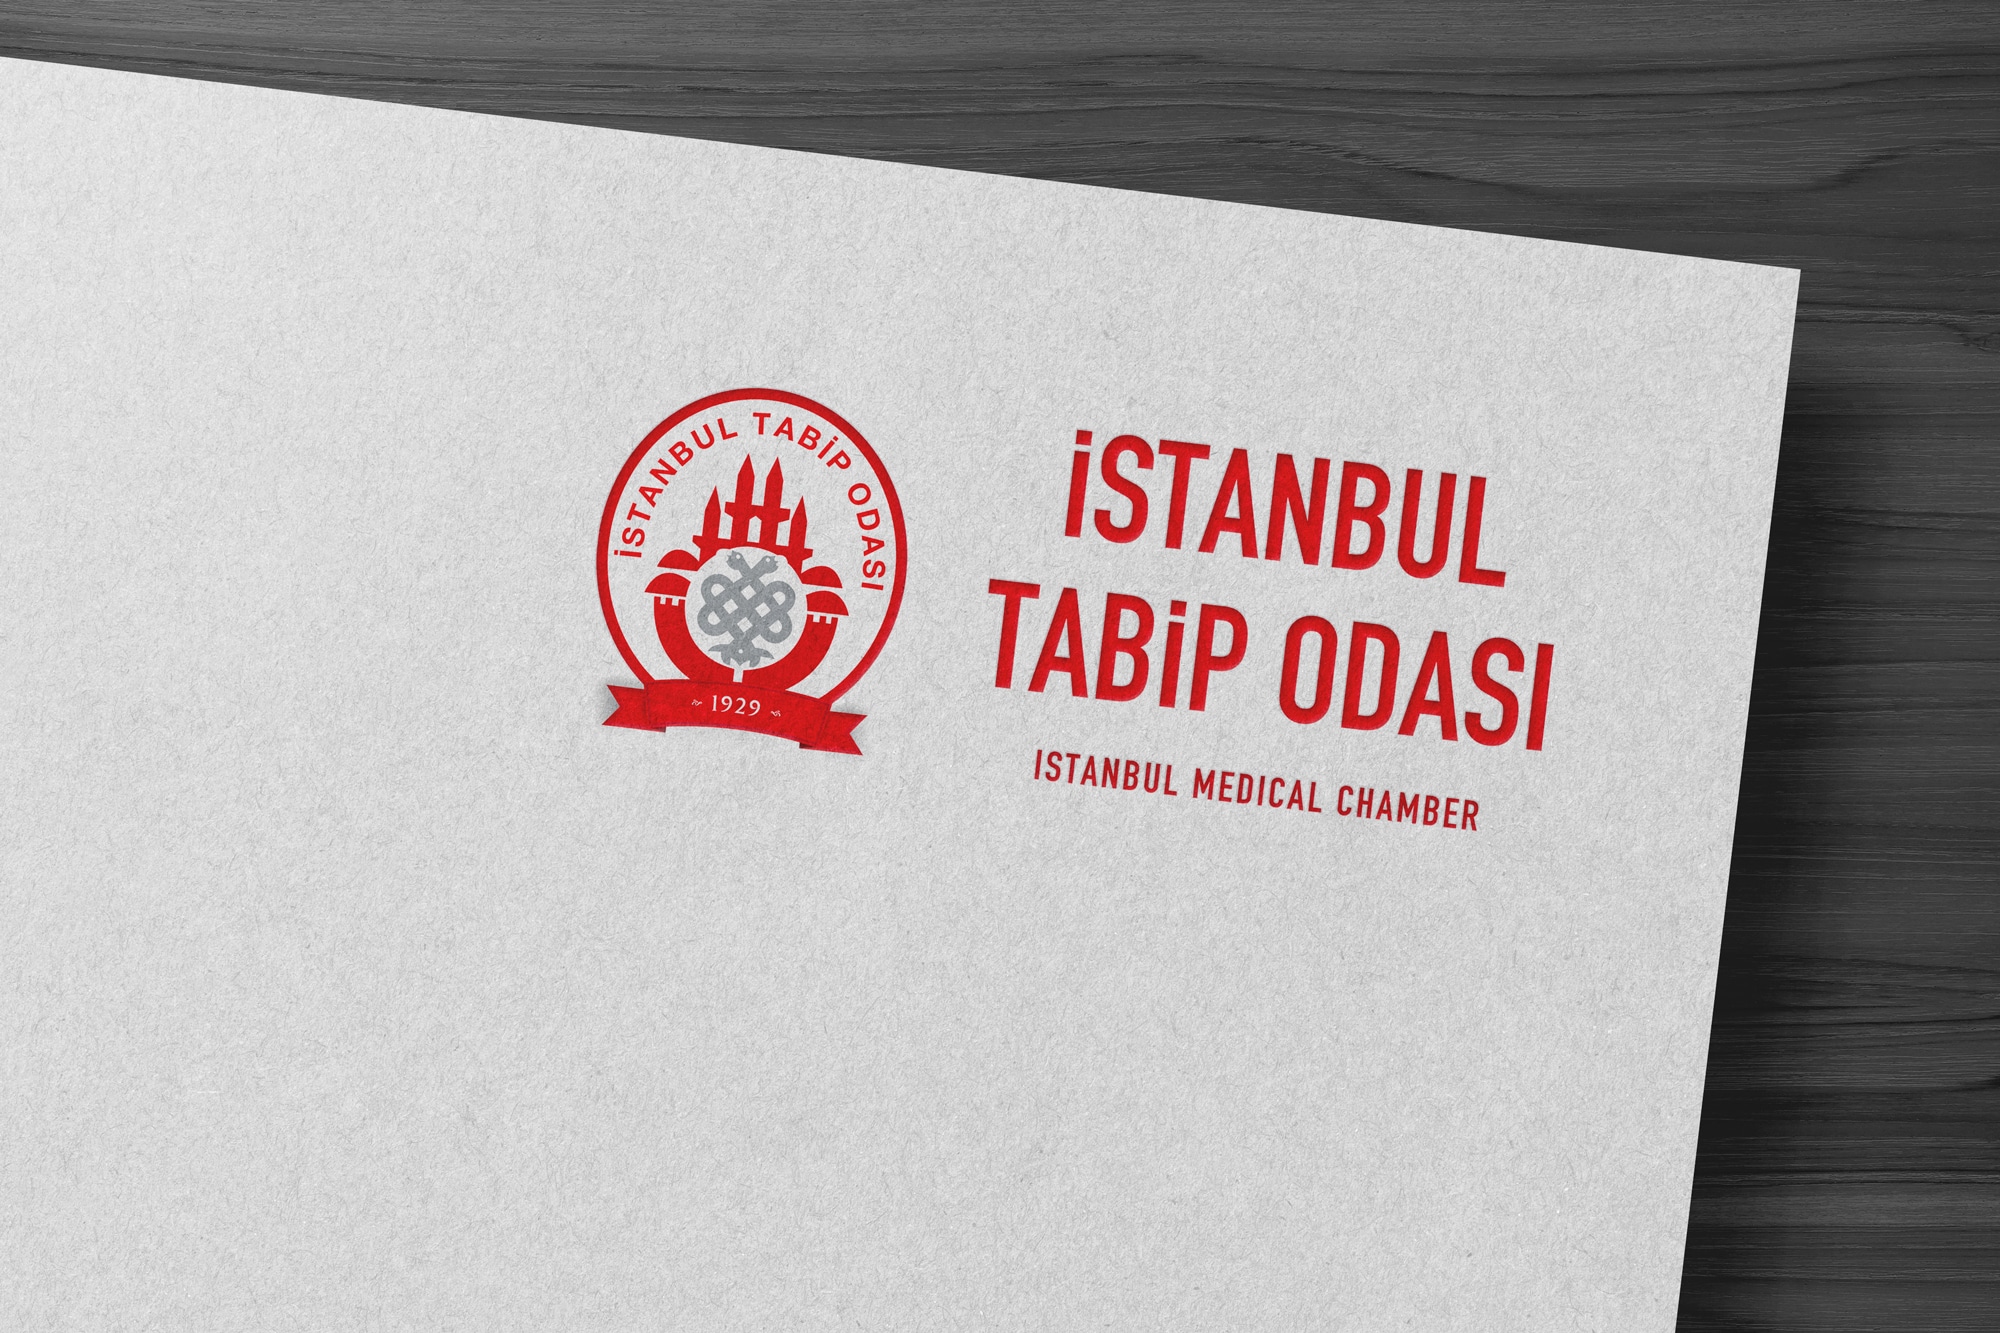 istanbul tabip odasi logo